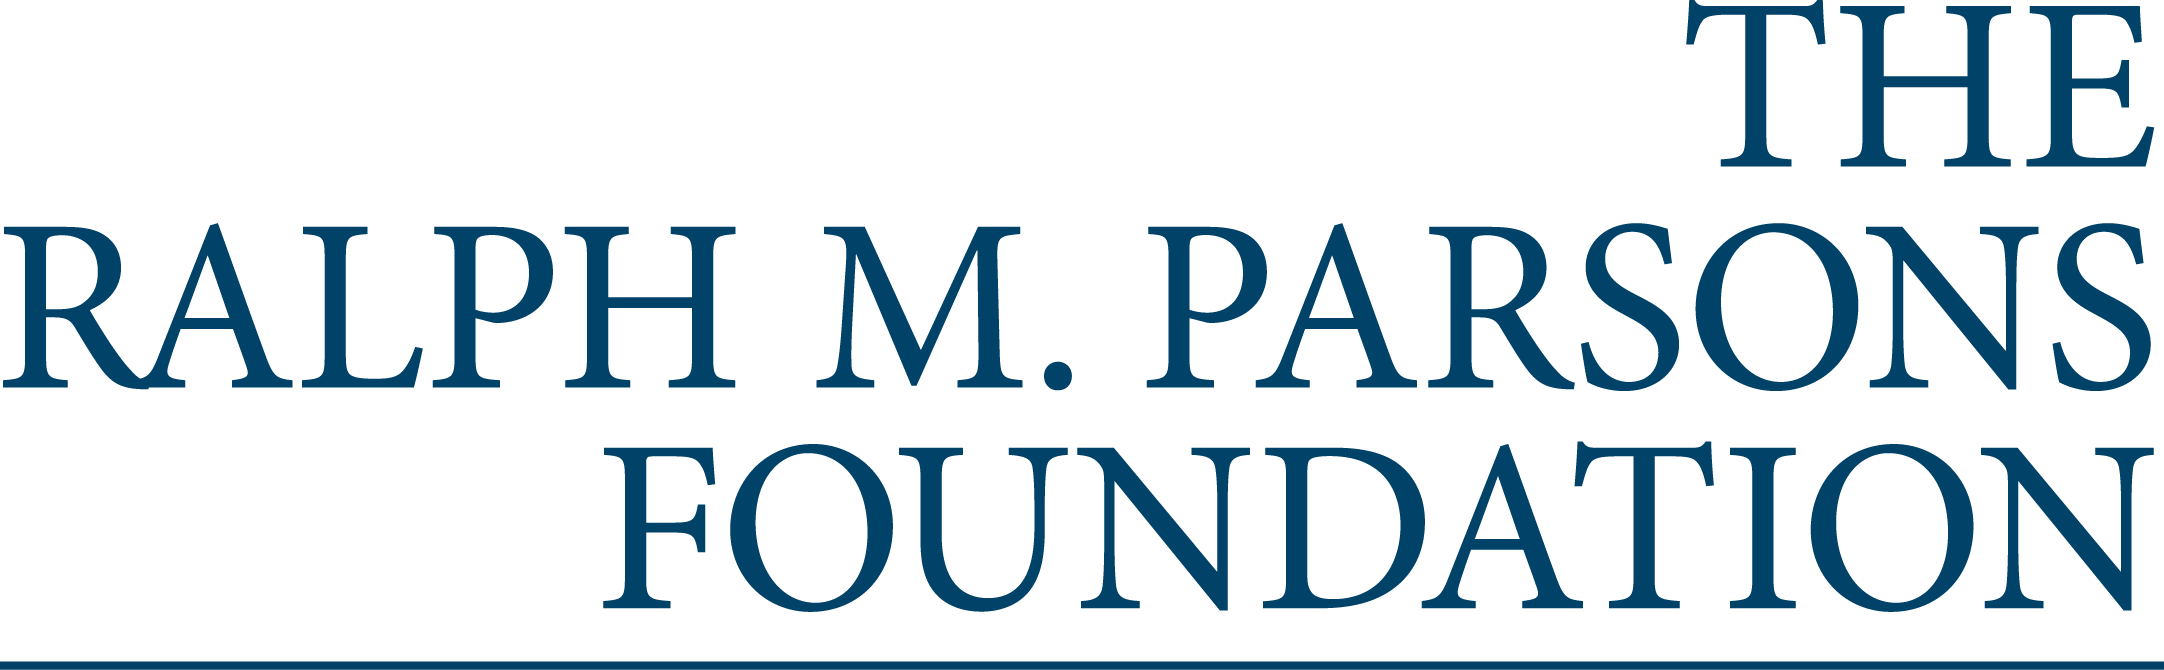 The Ralph M. Parsons Foundation logo